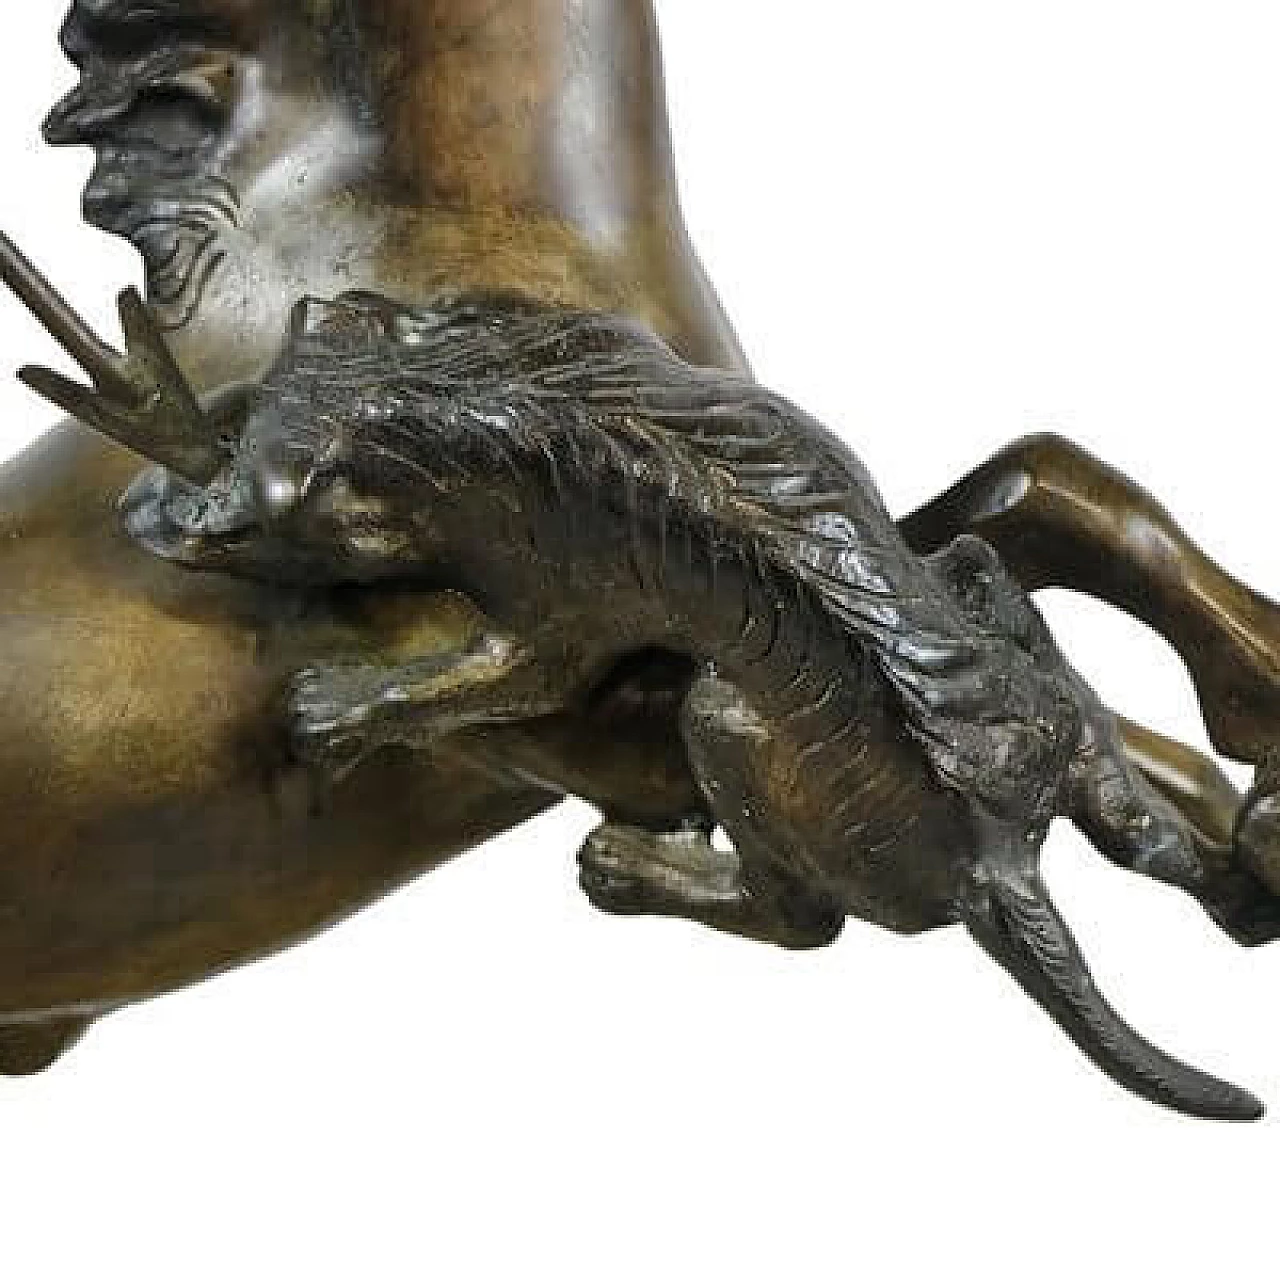 Indian warrior on horseback, reproduction after Tommaso Campajola, bronze sculpture 10